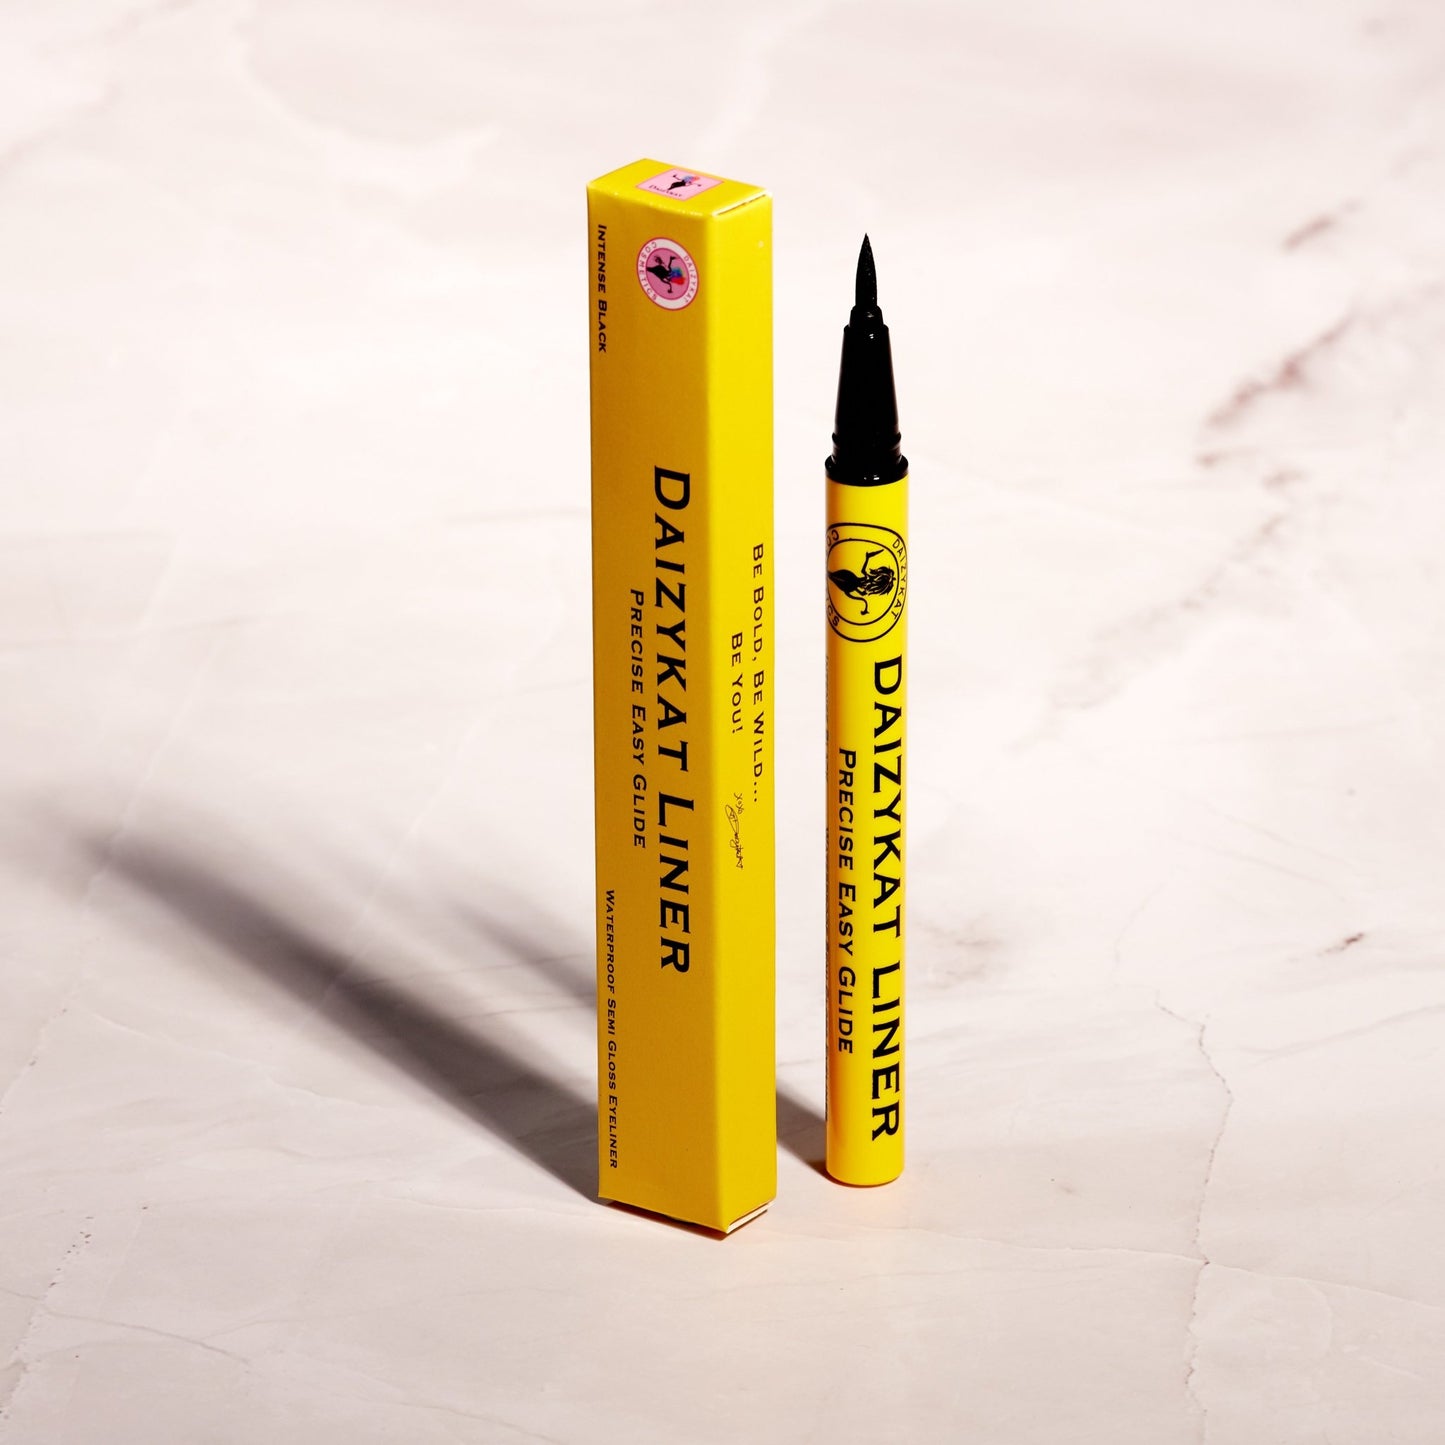 DaizyKat Waterproof Semi Gloss Eyeliner - Yellow Tube - DaizyKat Cosmetics DaizyKat Waterproof Semi Gloss Eyeliner - Yellow Tube DaizyKat Cosmetics eyeliner